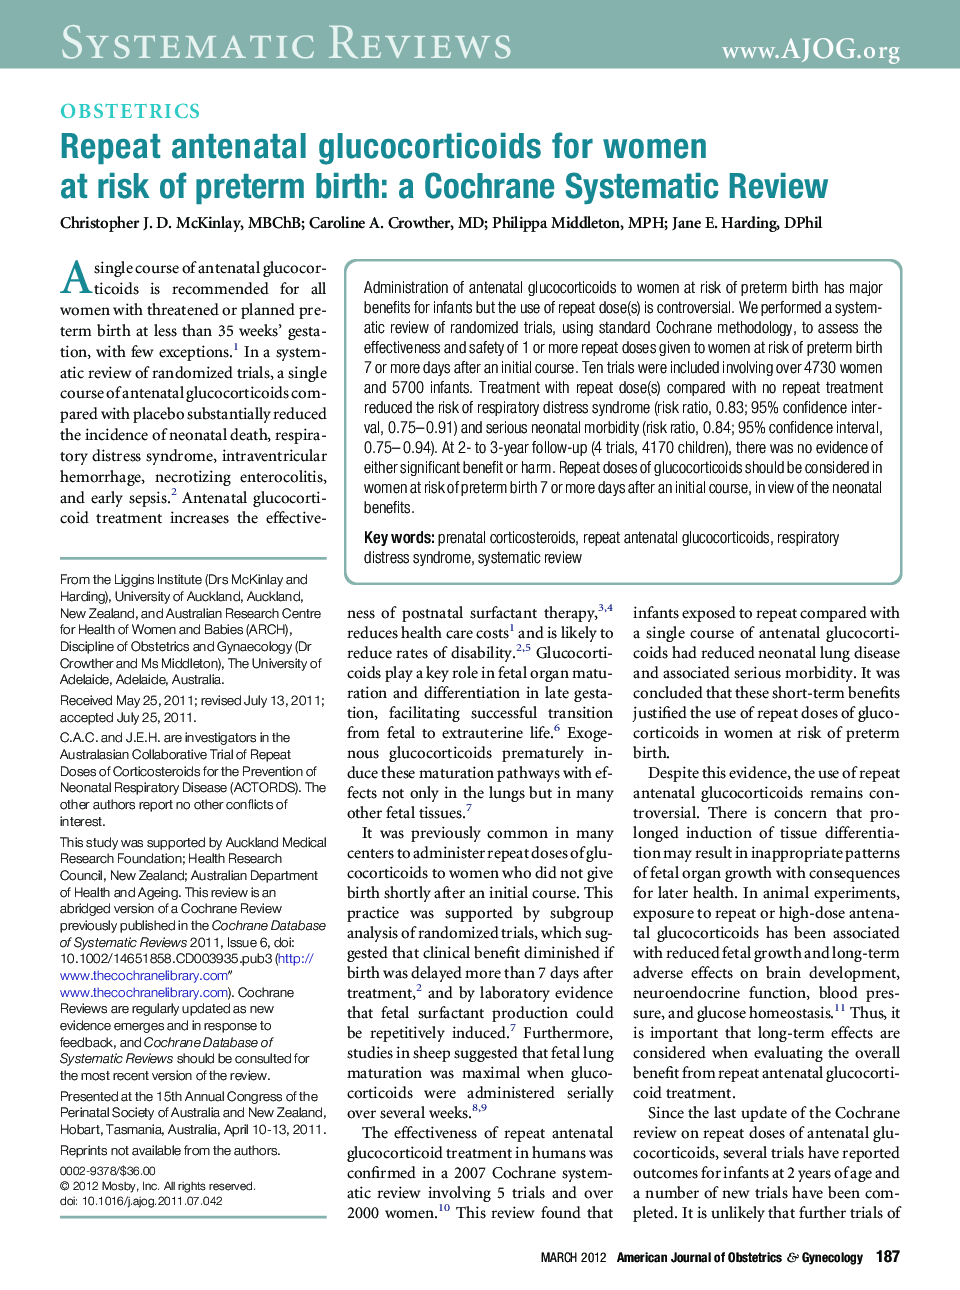 Repeat antenatal glucocorticoids for women at risk of preterm birth: a Cochrane Systematic Review 